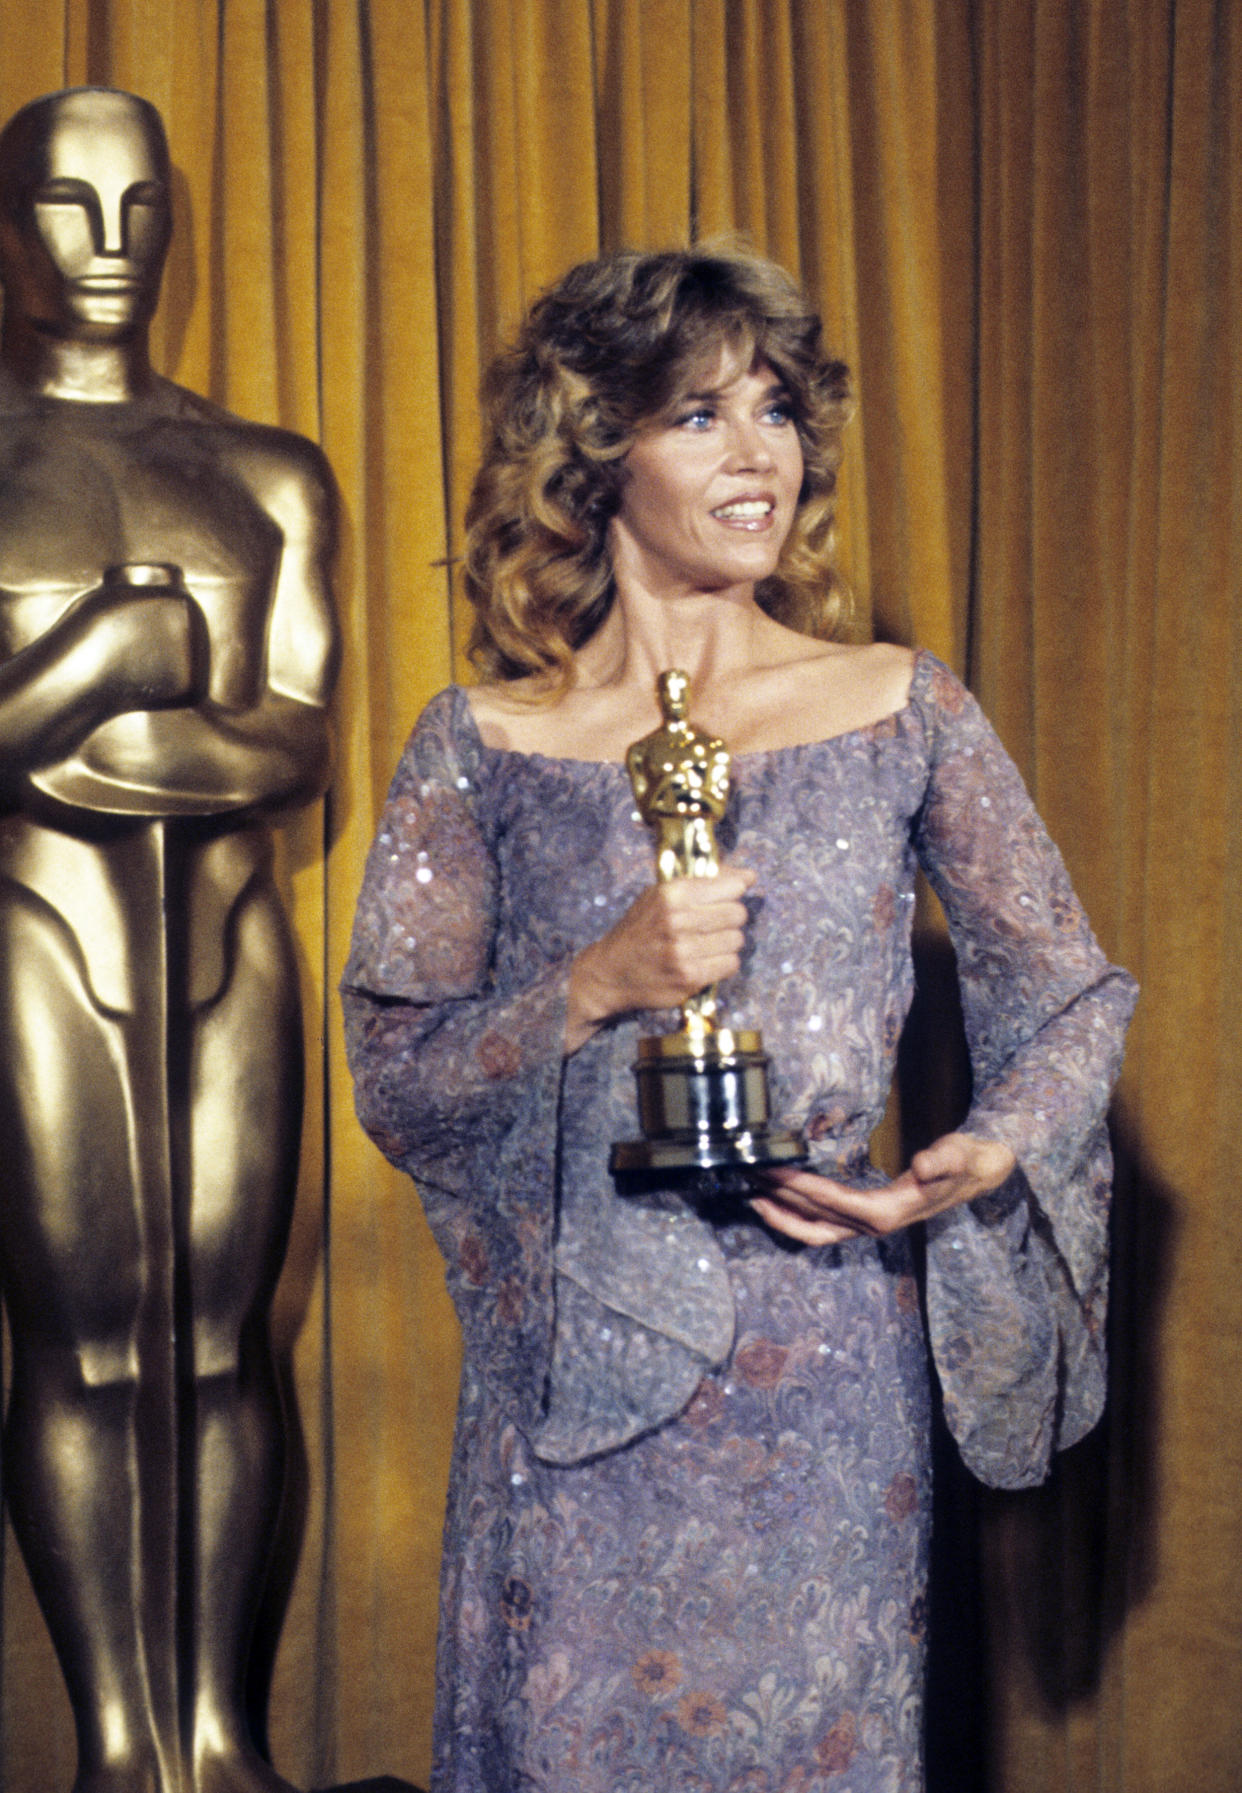 JANE FONDA Oscars 1979 (ABC Photo Archives / ABC Photo Archives/Getty Images)